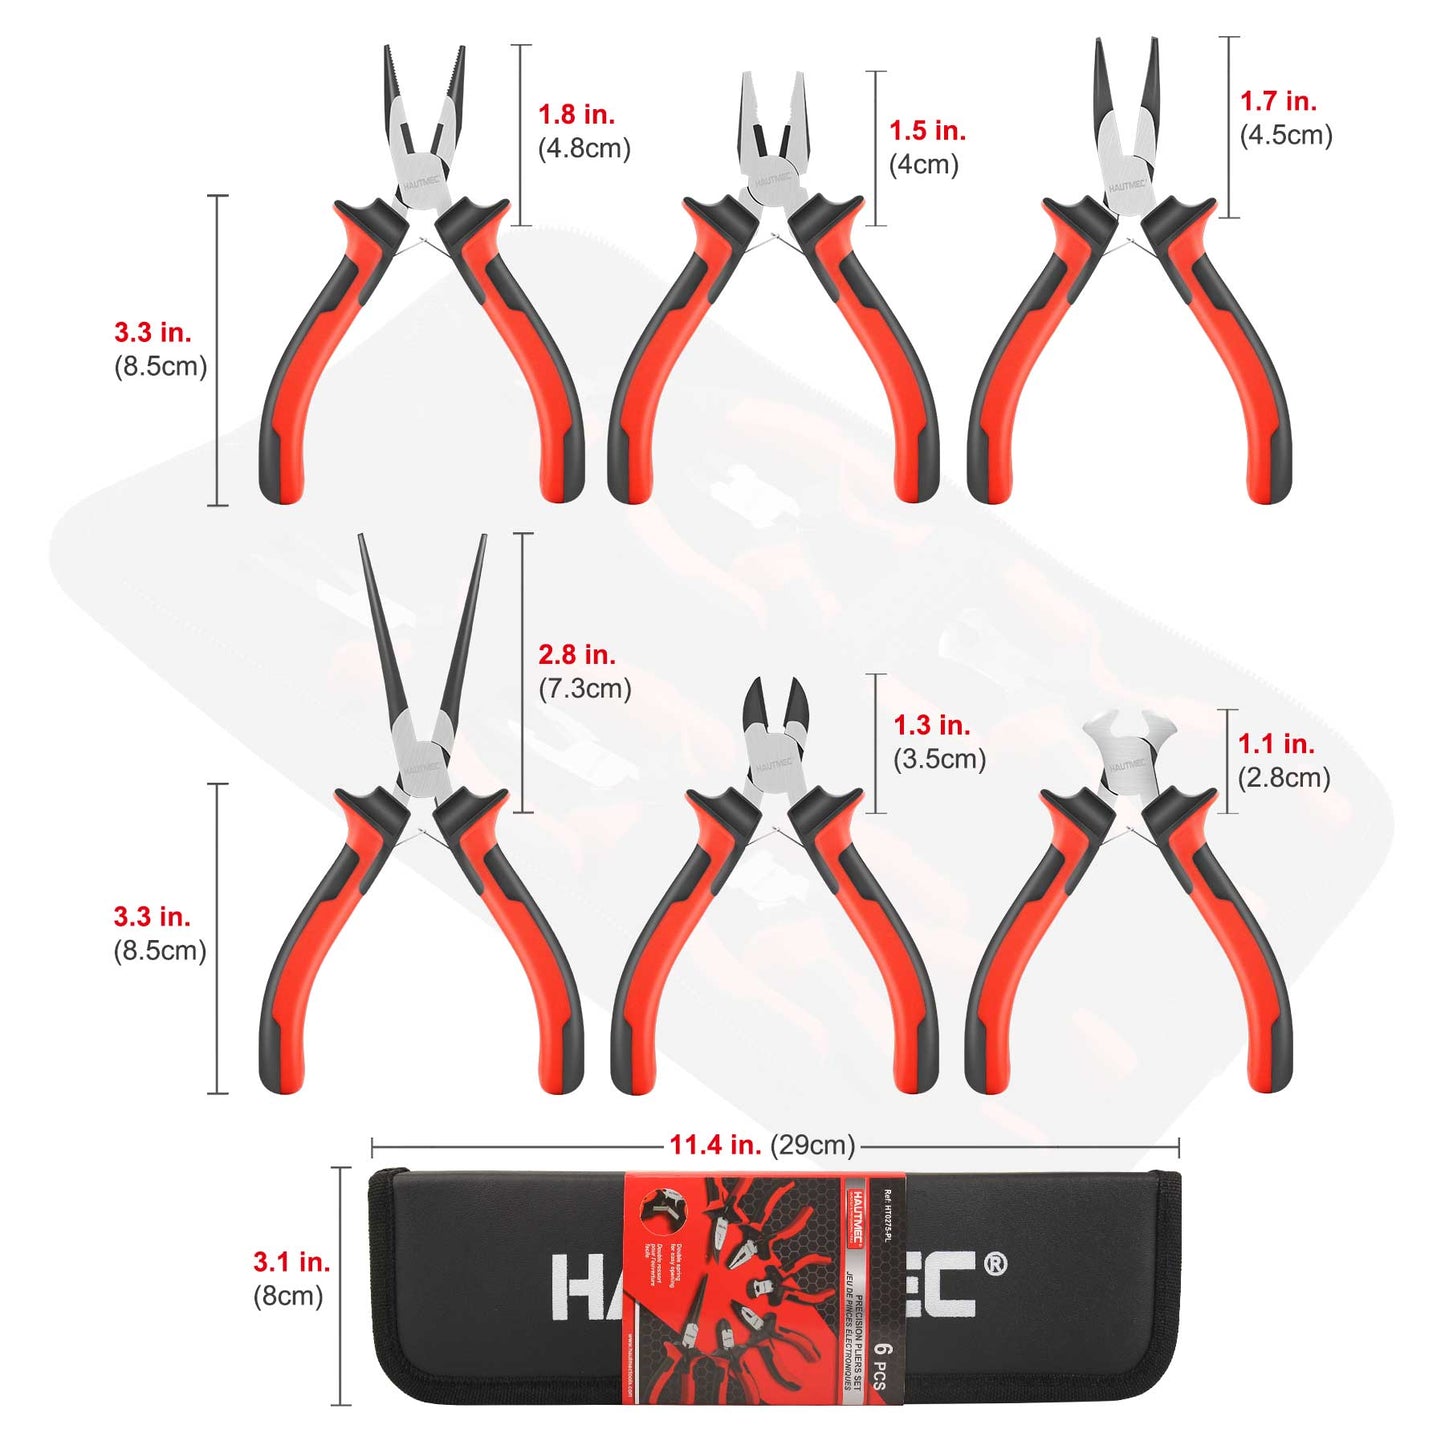 HAUTMEC 6PCS Mini Pliers Set High Leverage Multi Pliers Tool Set with Mini Needle Nose Pliers,Linesman Pliers,Long Nose Pliers,Bent Nose Pliers,Diagonal Cutters,End Cutting Pliers HT0275